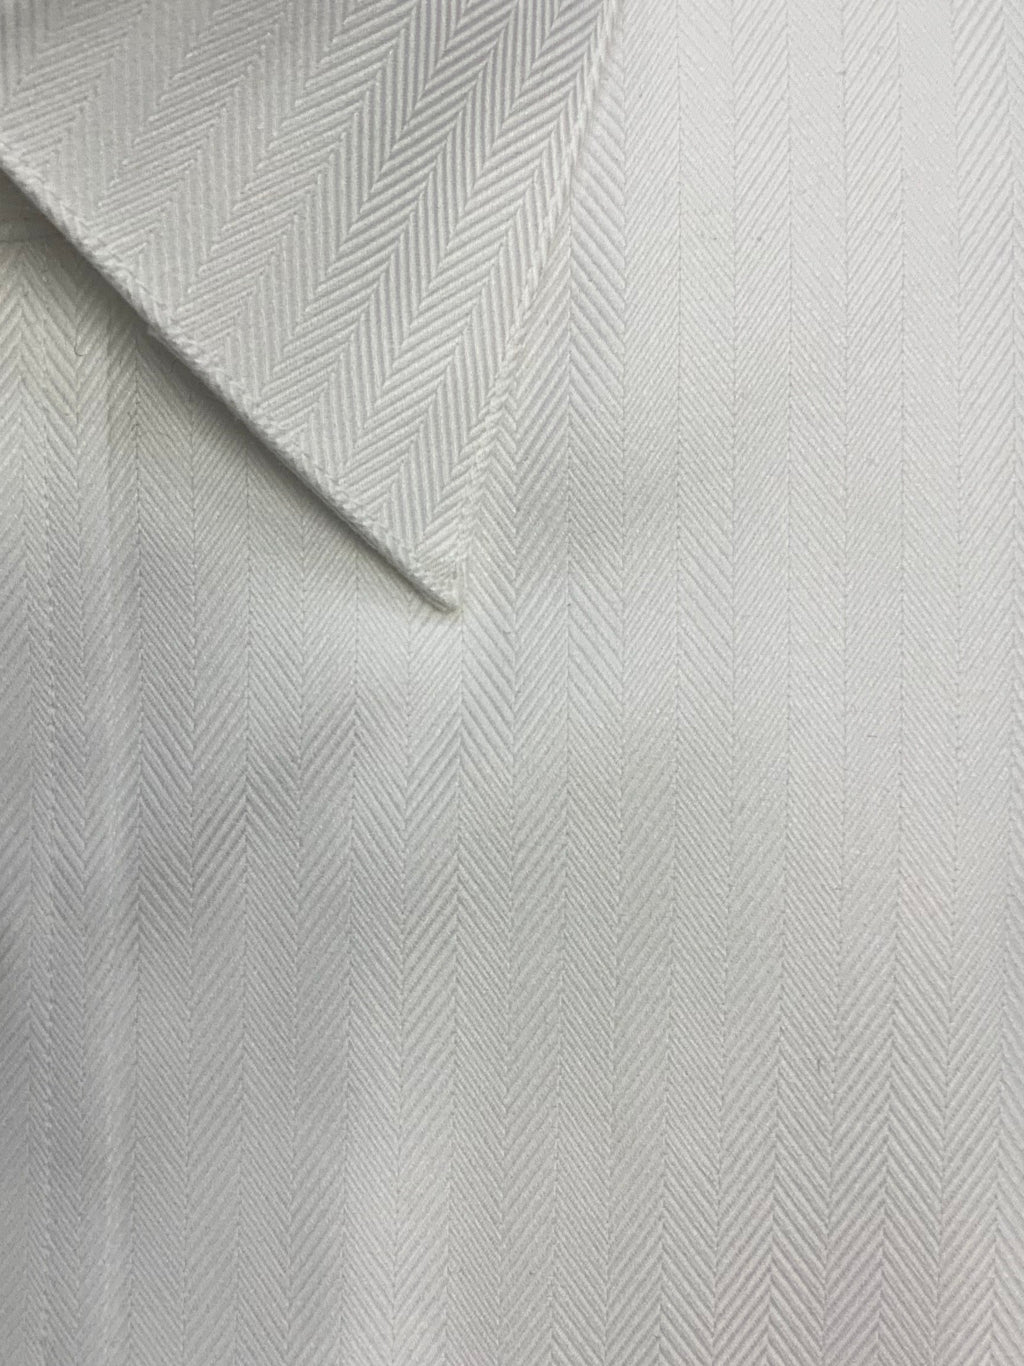 Giovanni's Modified Spread Herringbone Dress Shirt - White-01